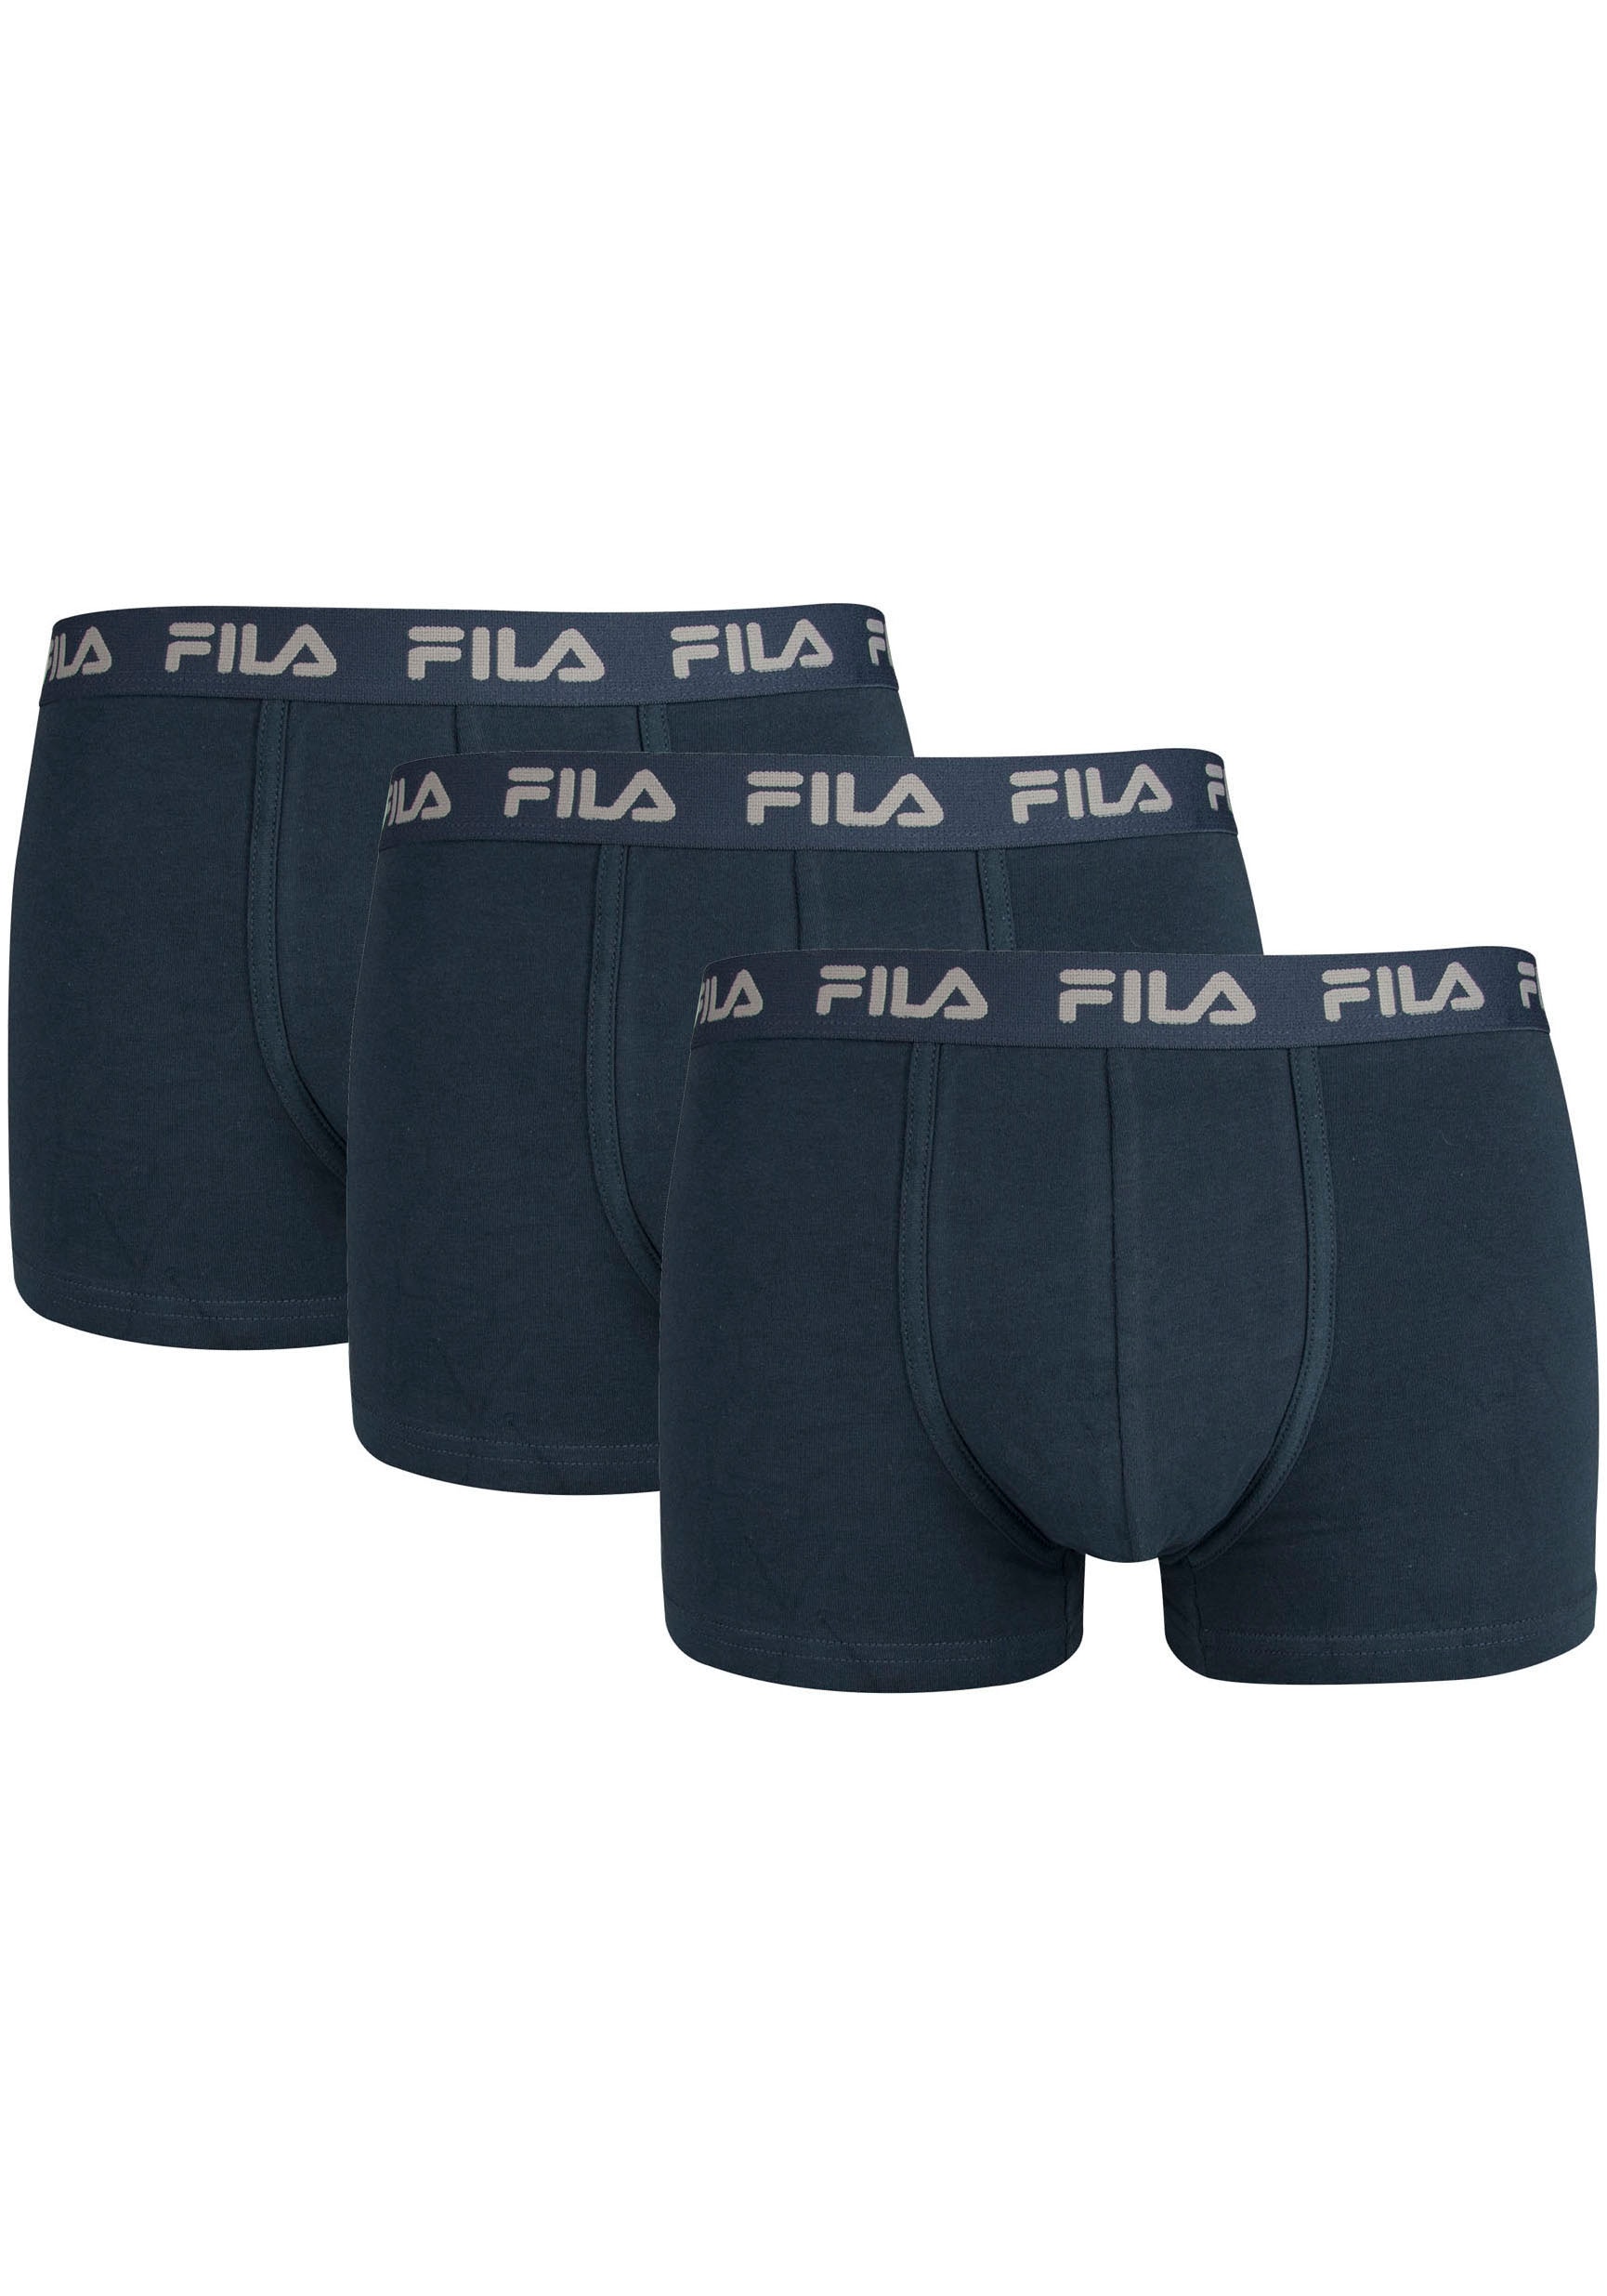 Fila Boxershorts, (3er Pack), mit elastischem Logobund